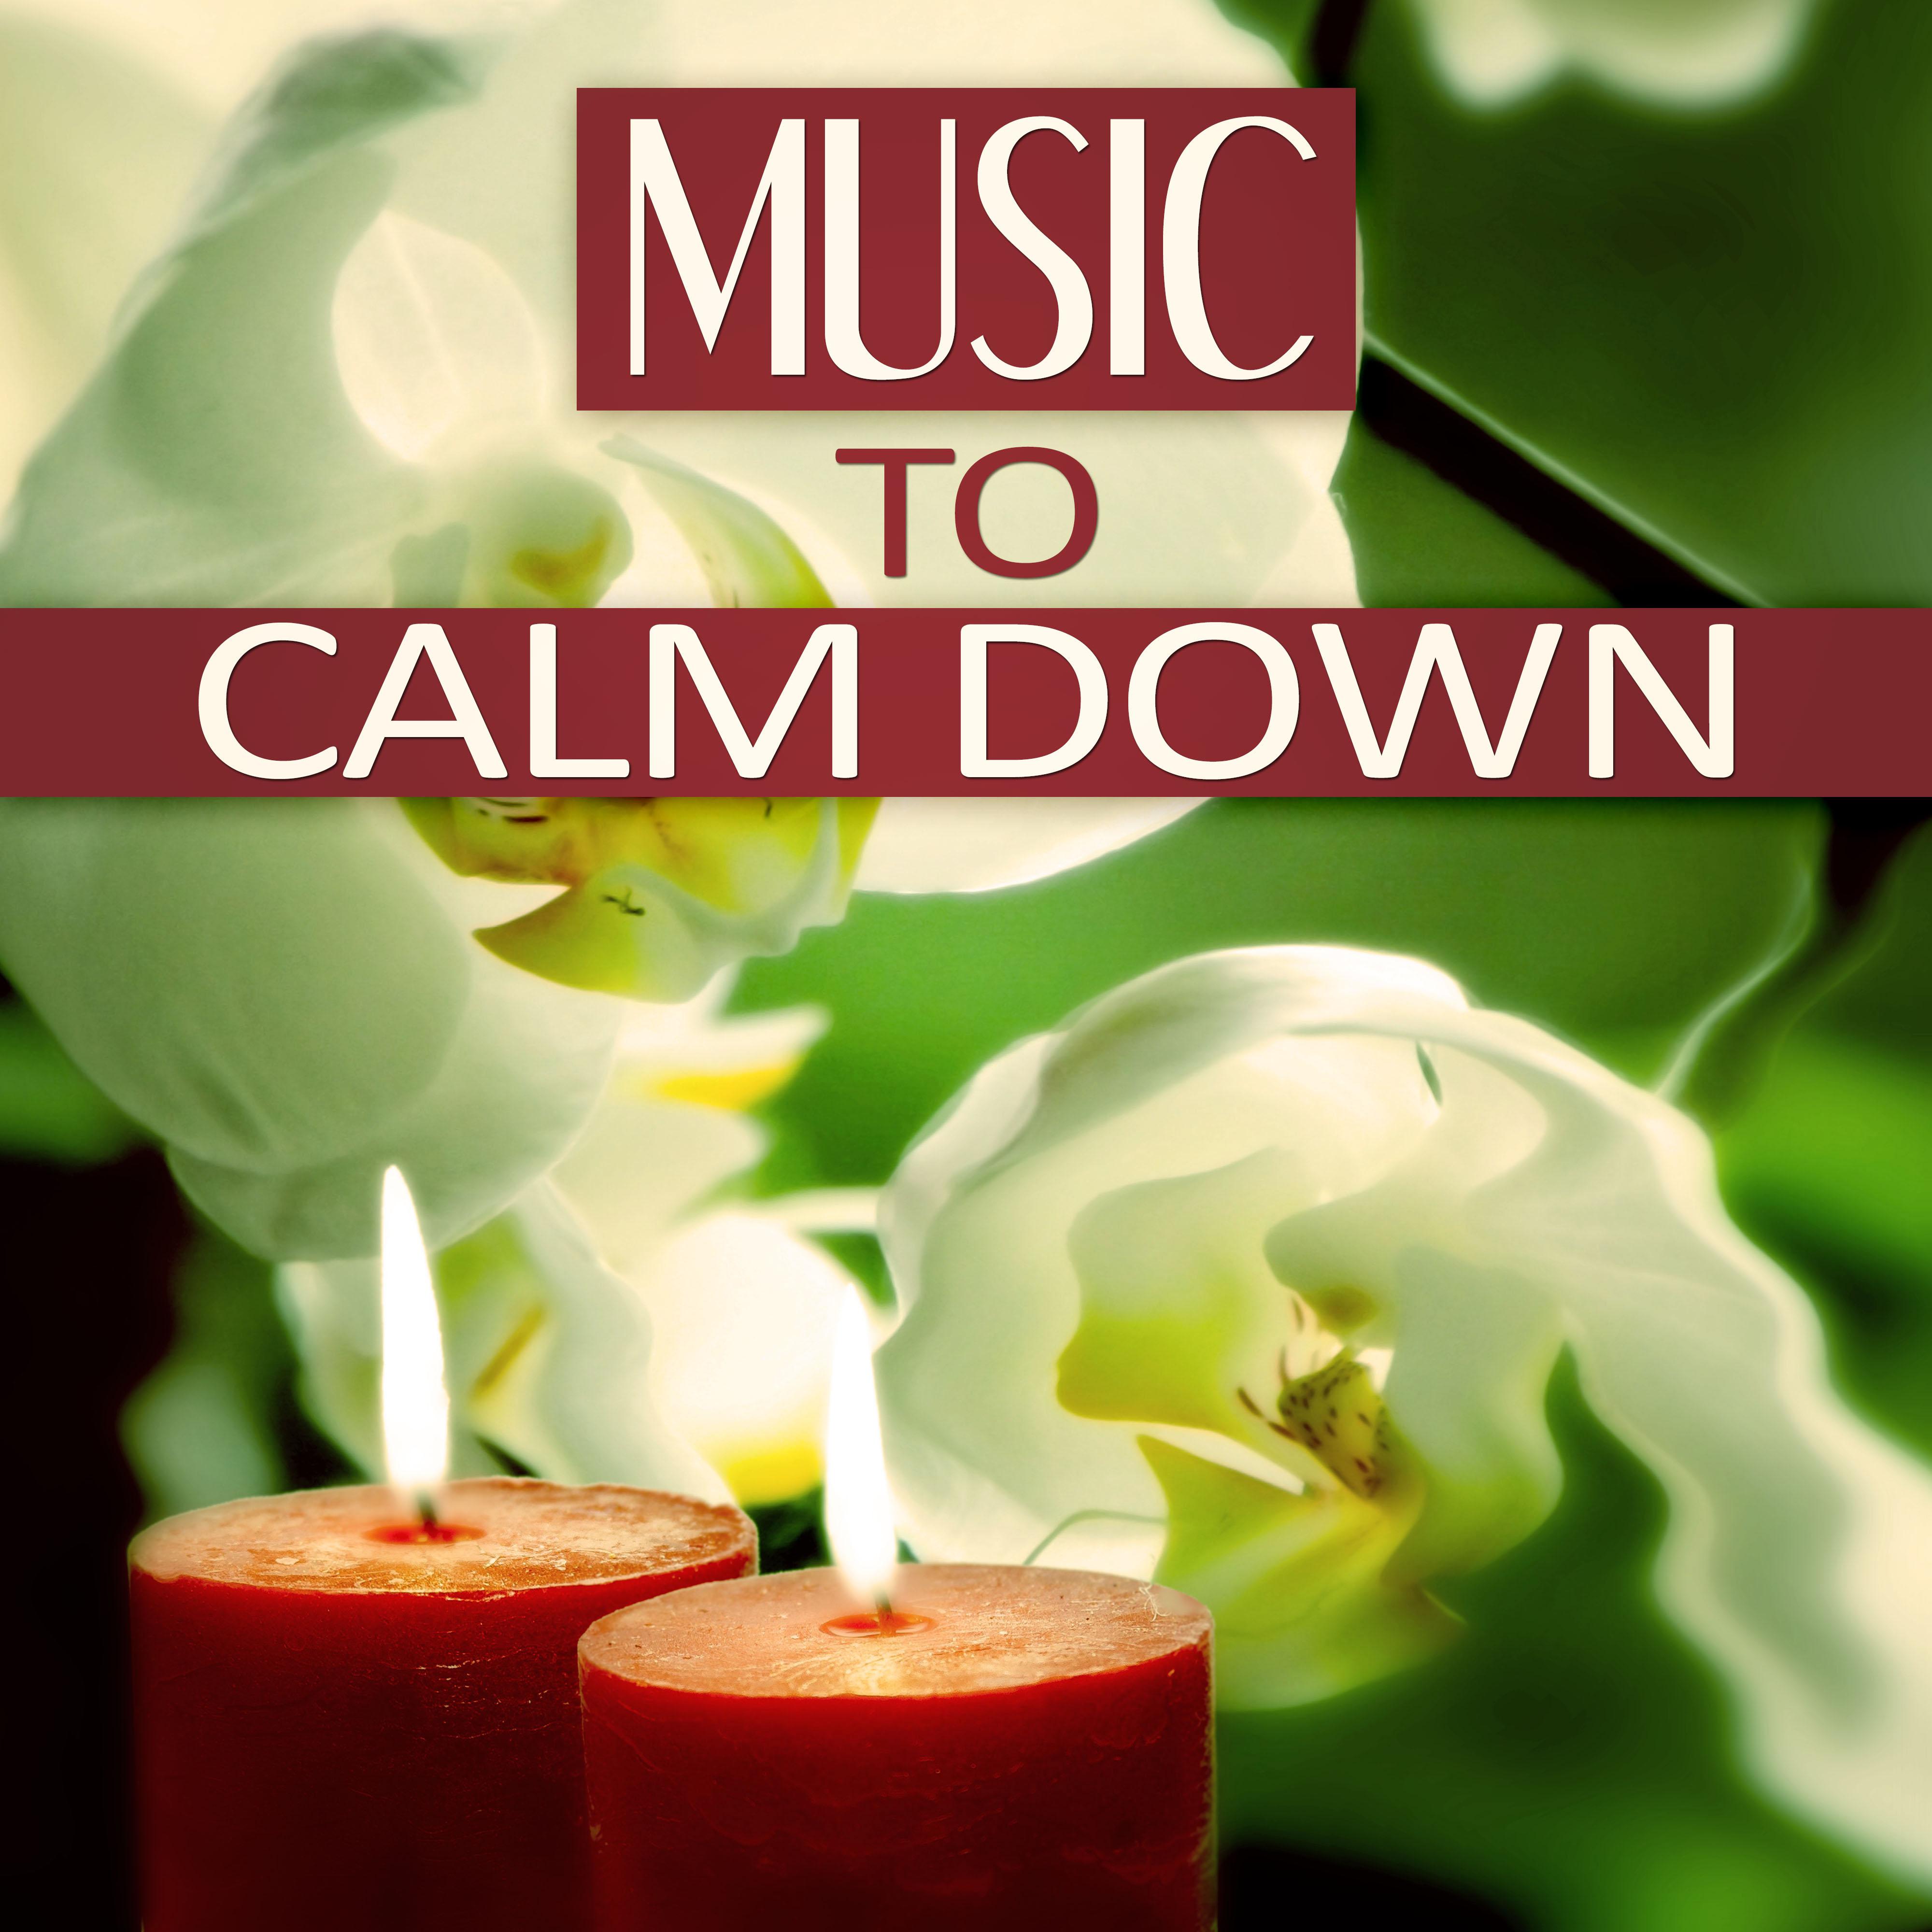 Music to Calm Down - Relaxing Nature Sounds for Spa & Wellness Center, Spa Calmness, Ocean Waves, Birds